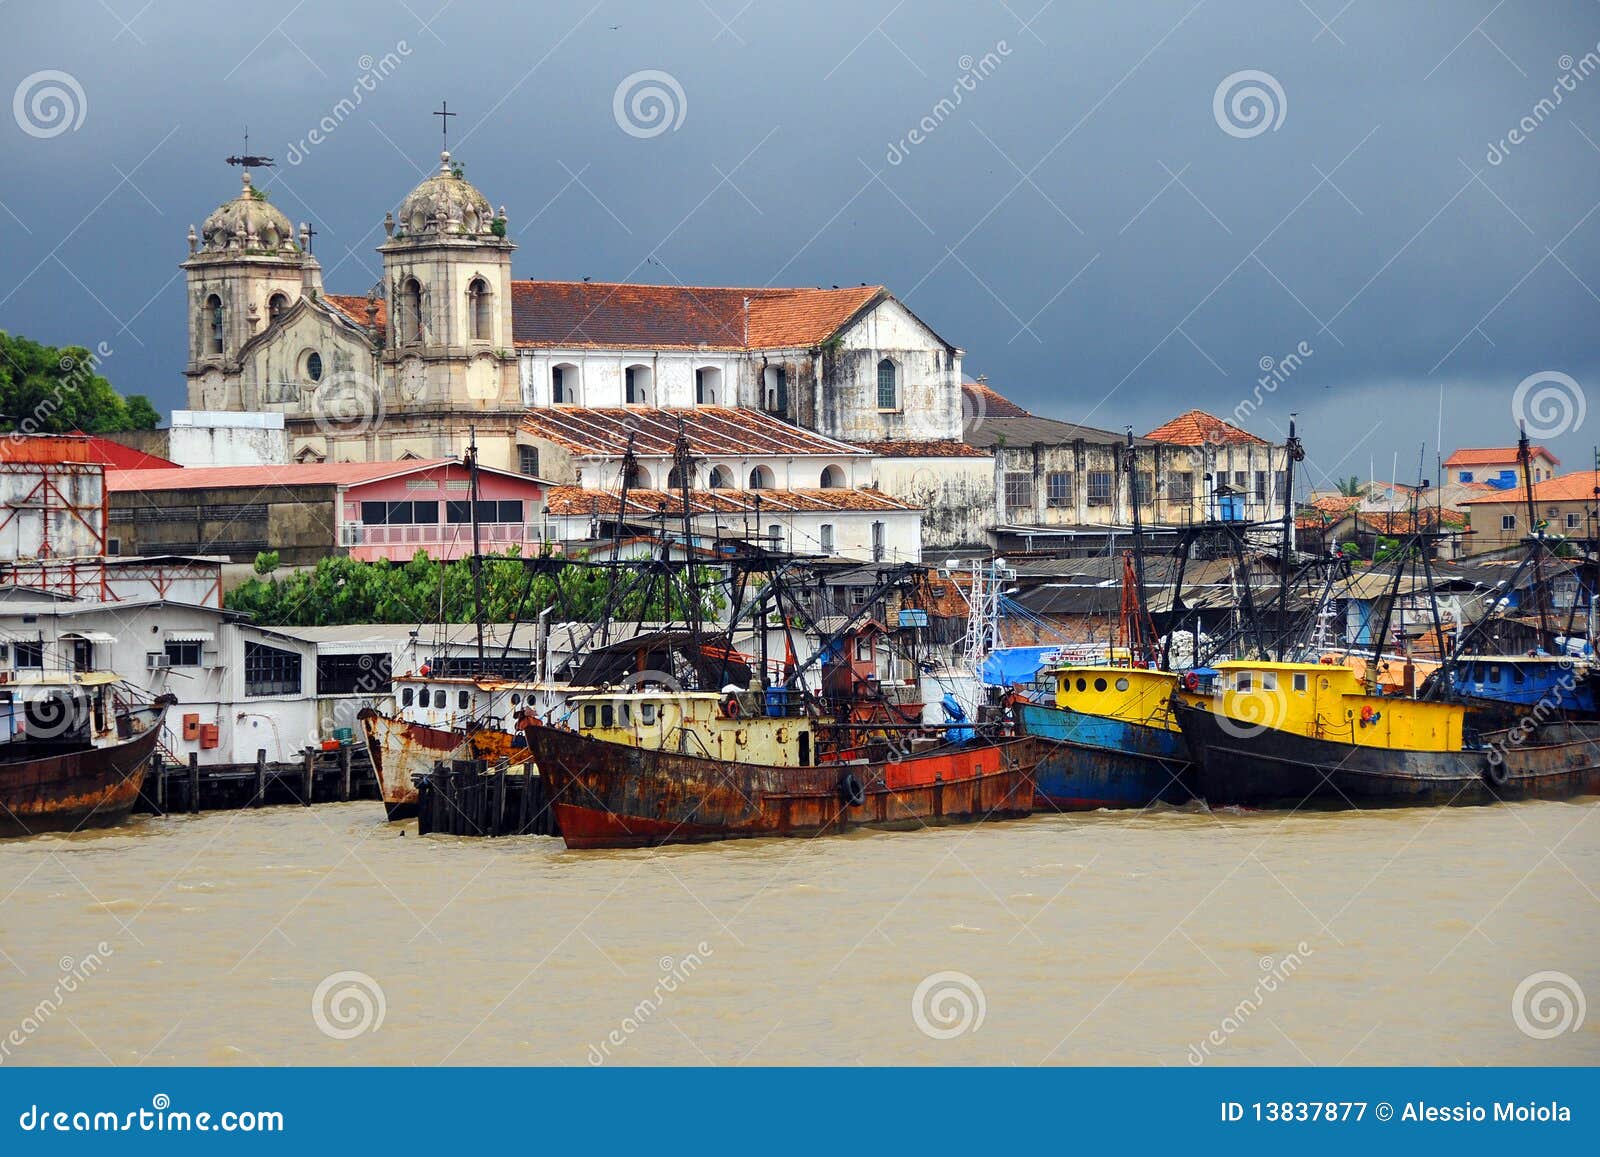 belÃÂ©m, old boats on the river - brazil